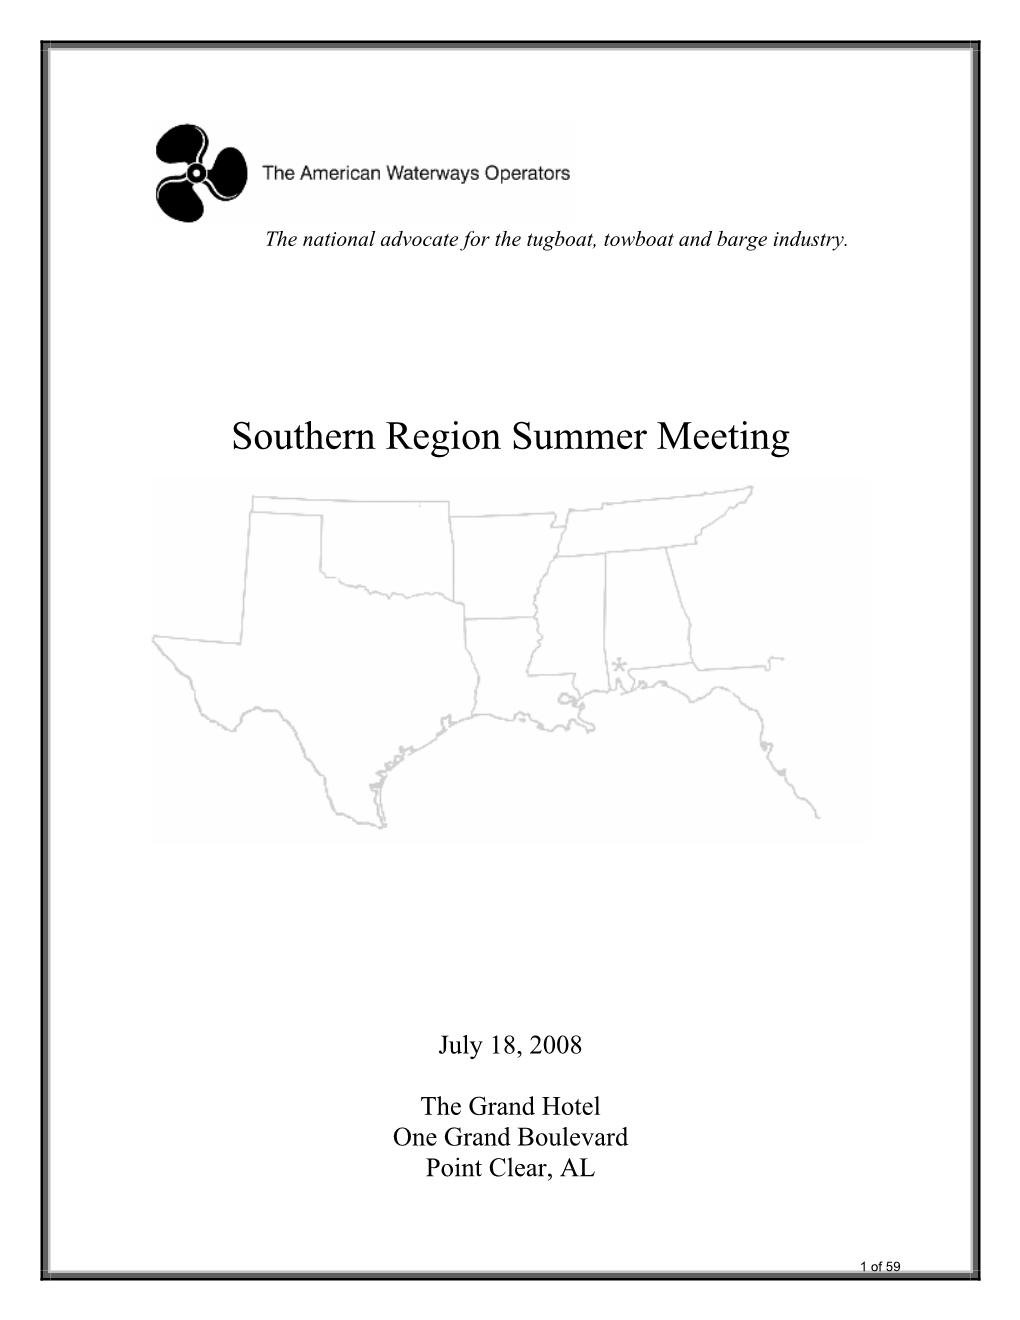 Southern Region Summer Meeting